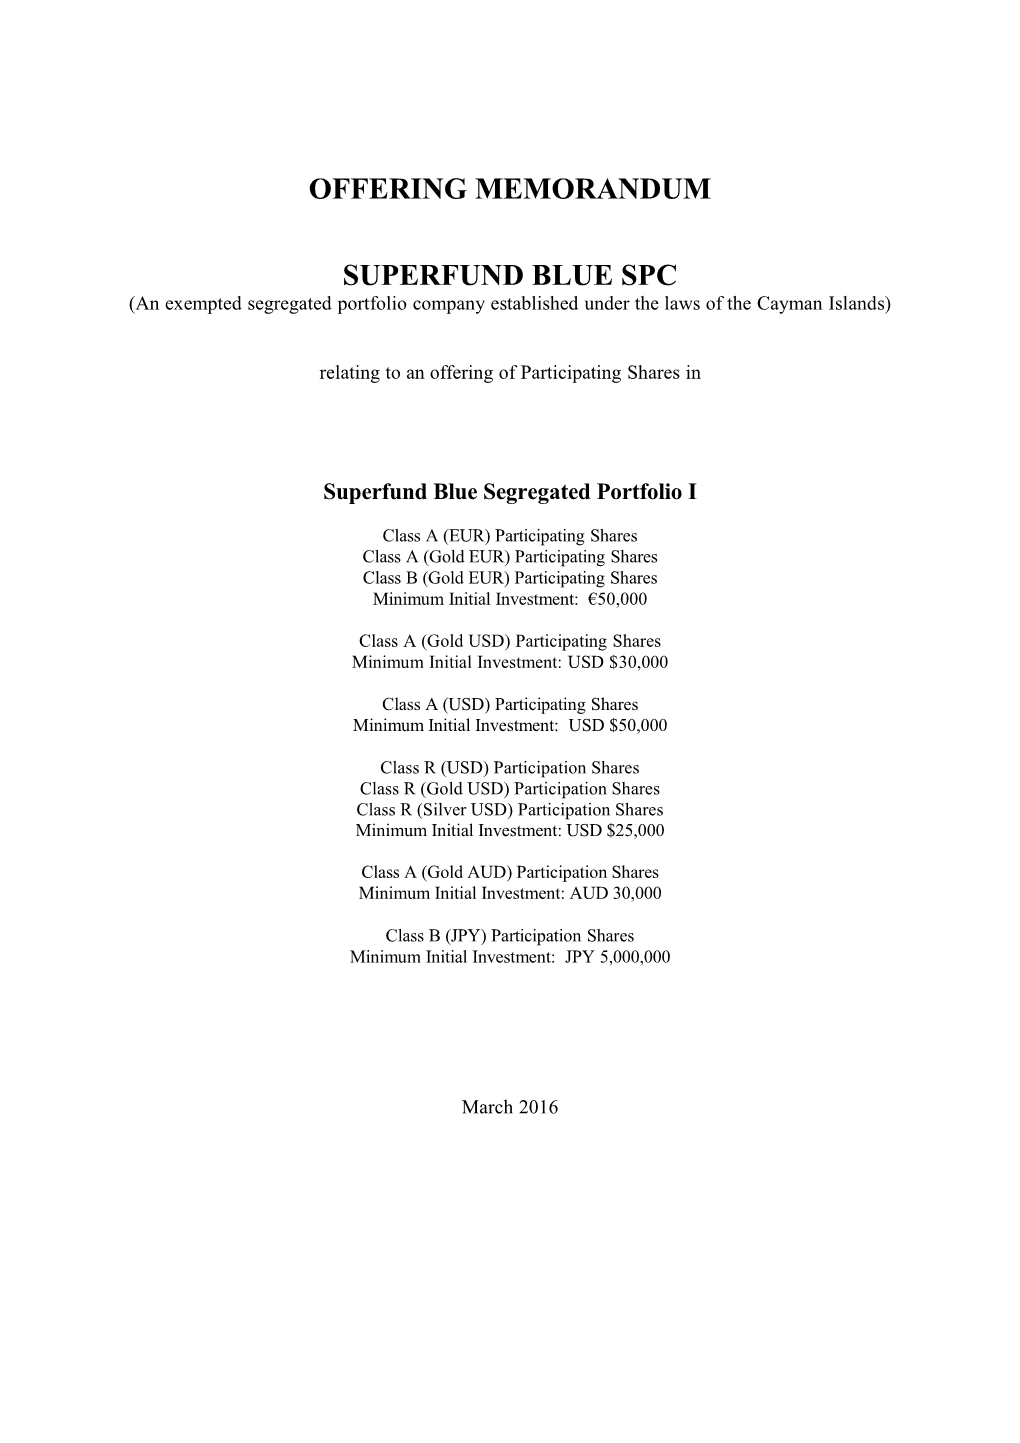 Offering Memorandum Superfund Blue